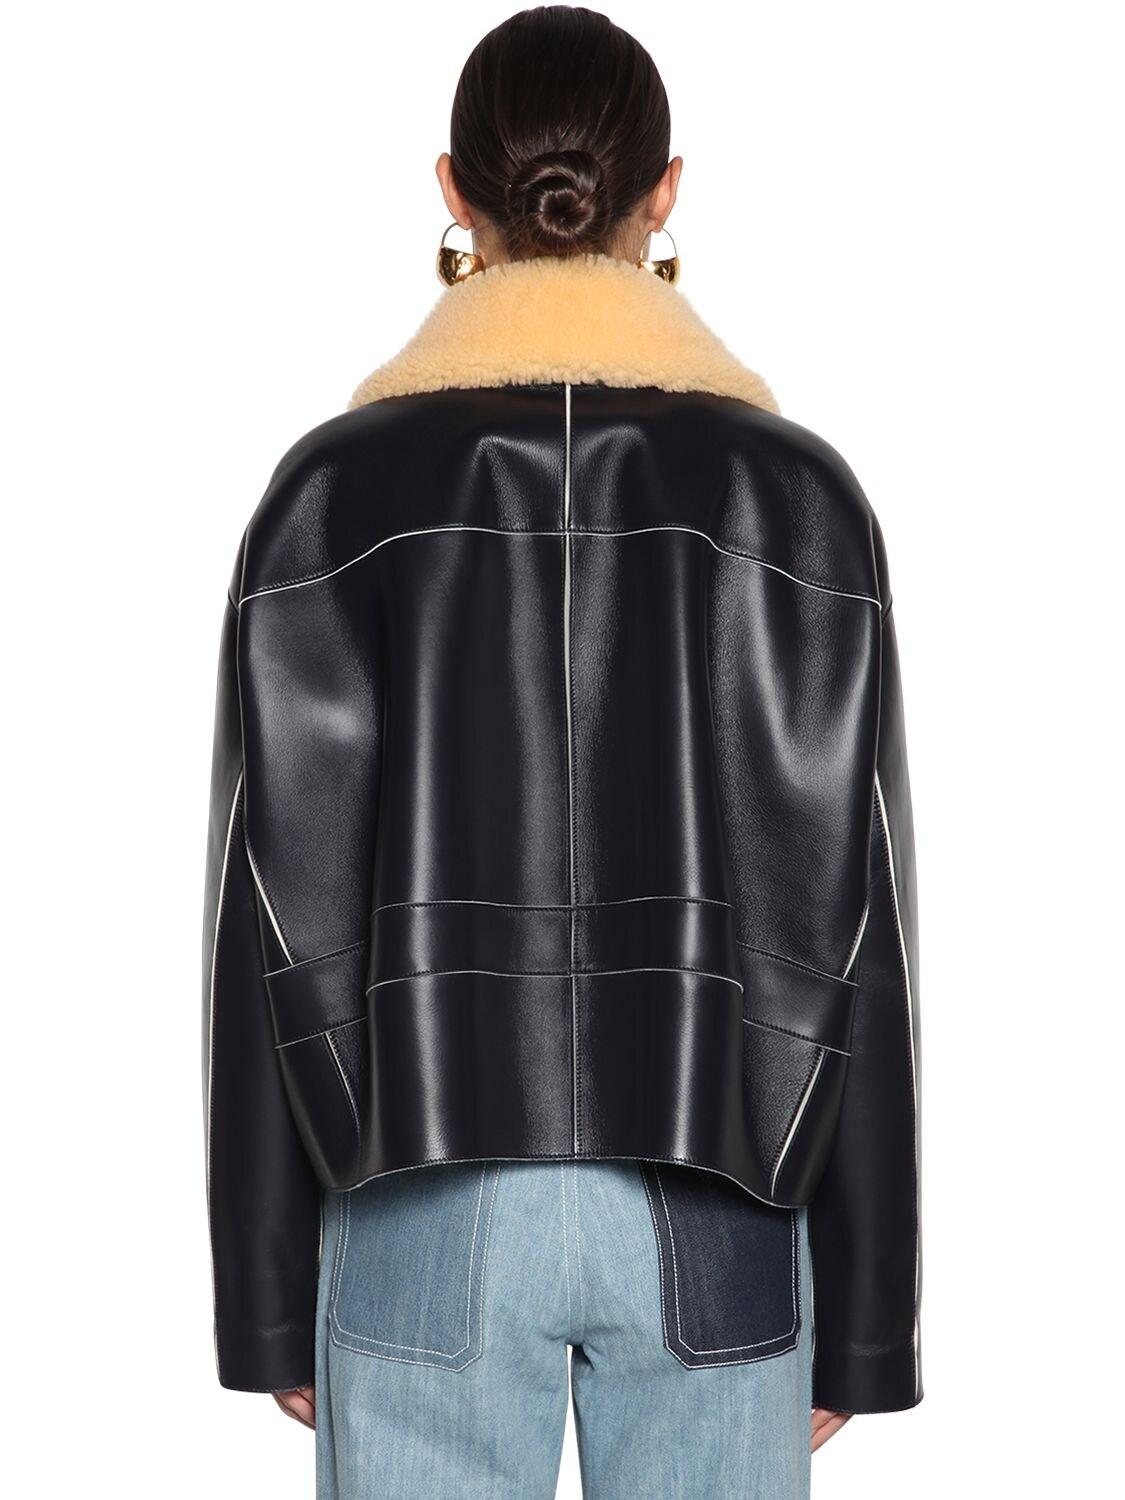 Marni Oversize Leather Jacket in Black - Lyst